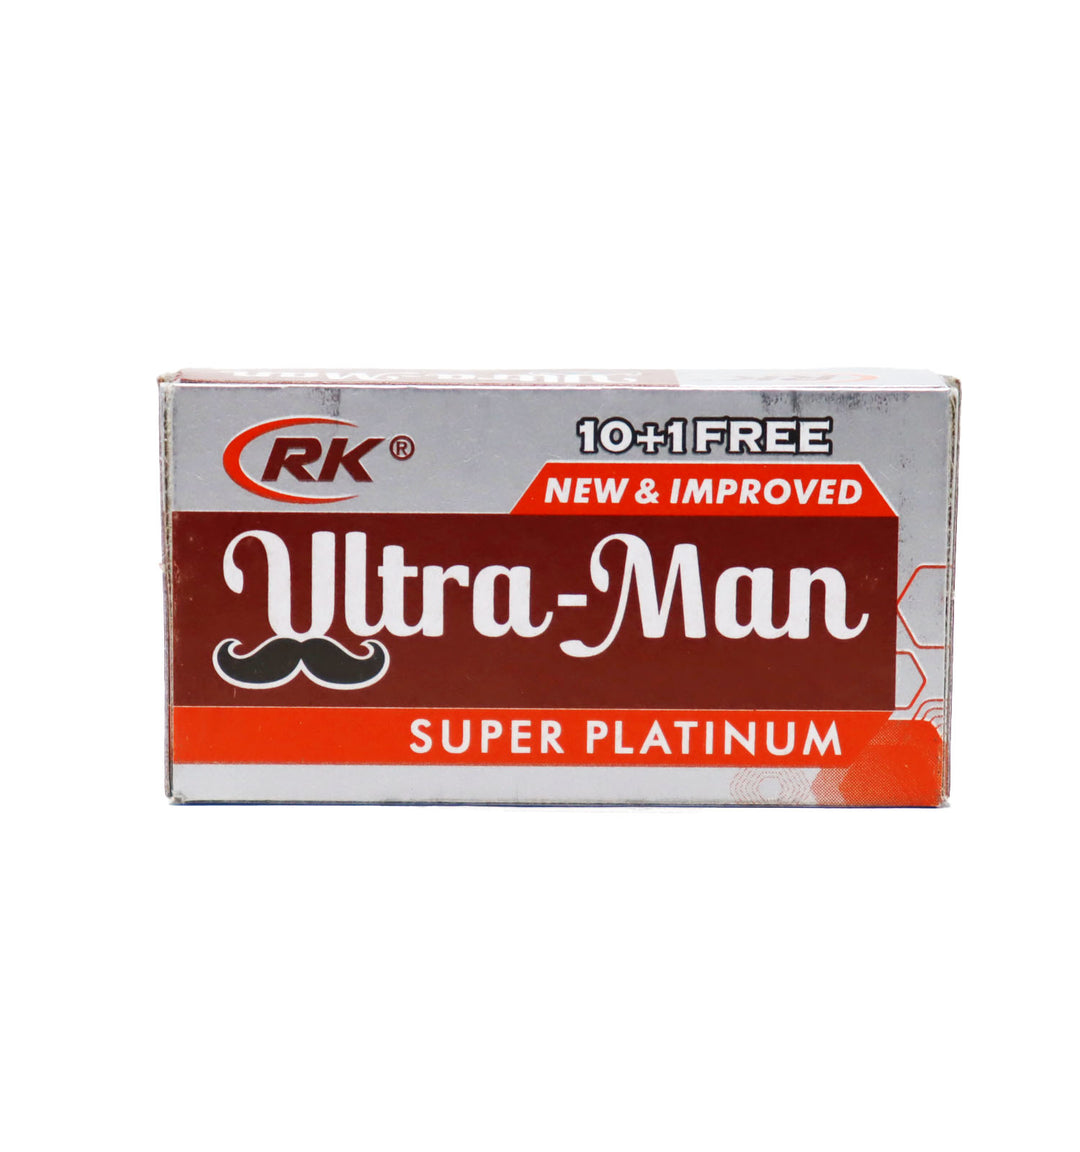 

RK Ultra Man Super Platinum Barber Blade Box of 10 pieces. 